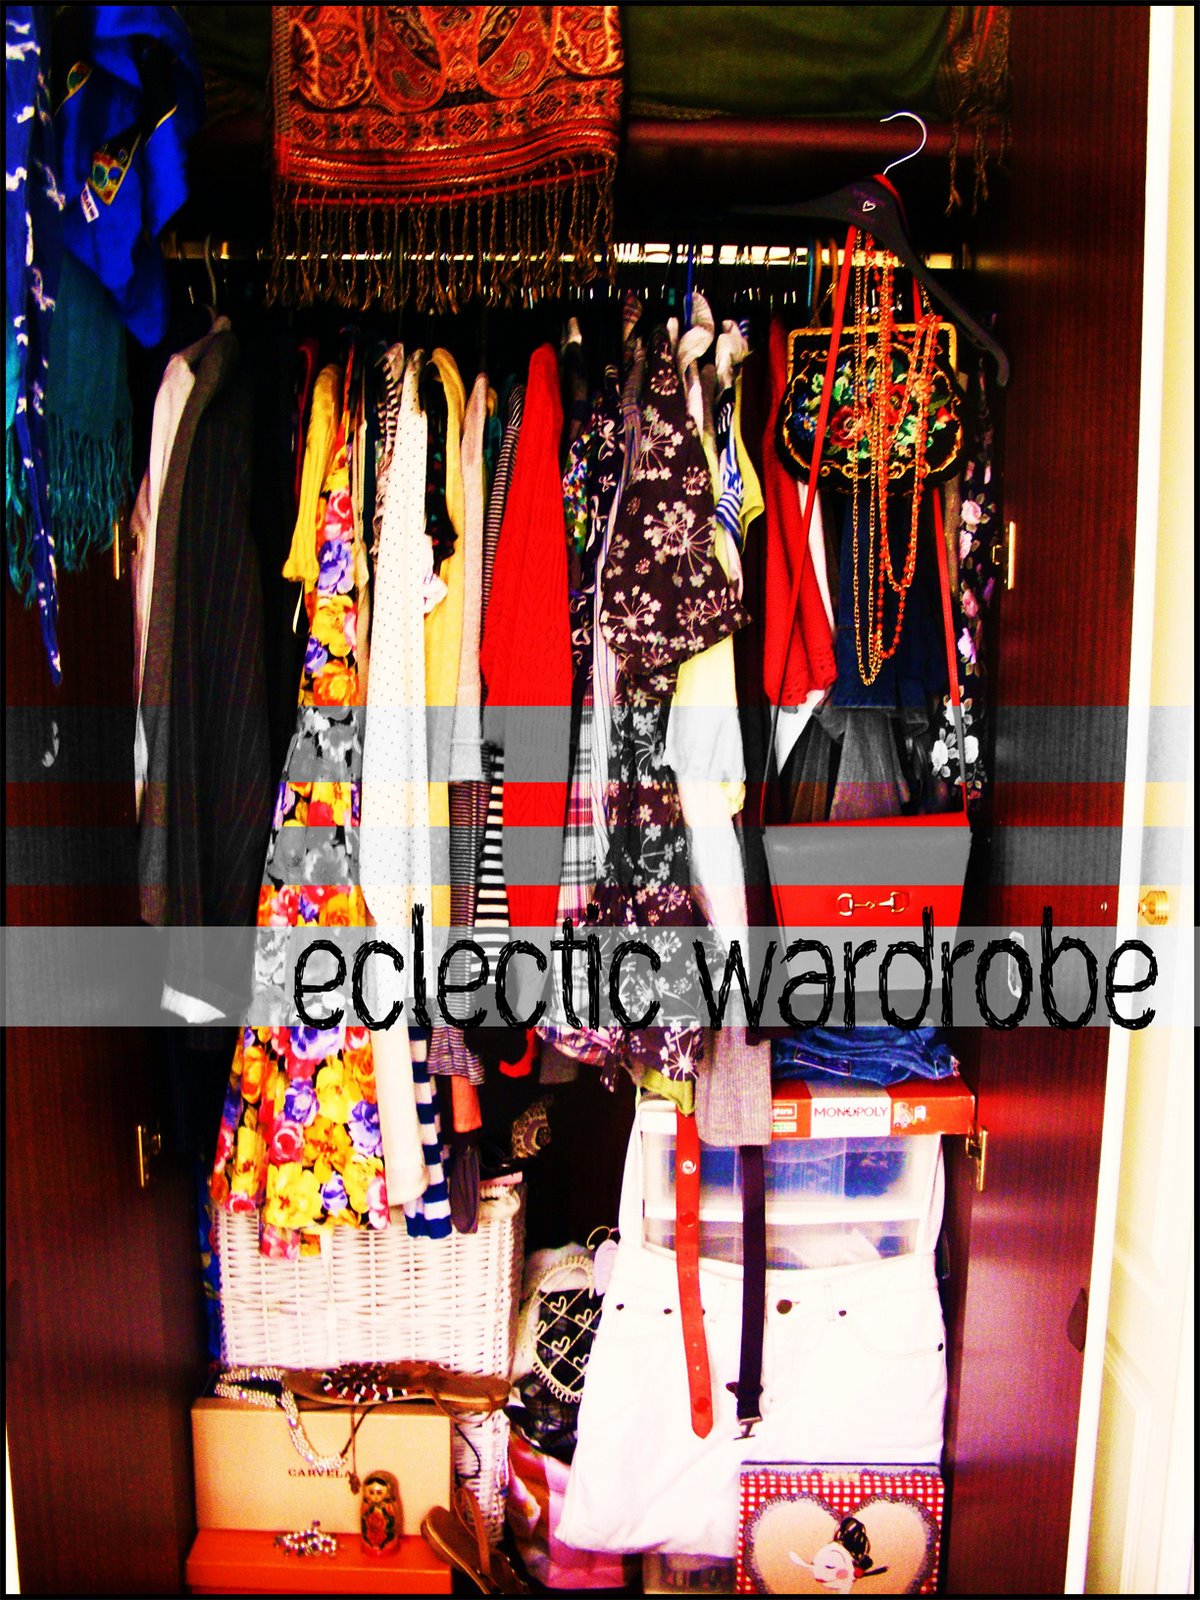 Eclectic wardrobe